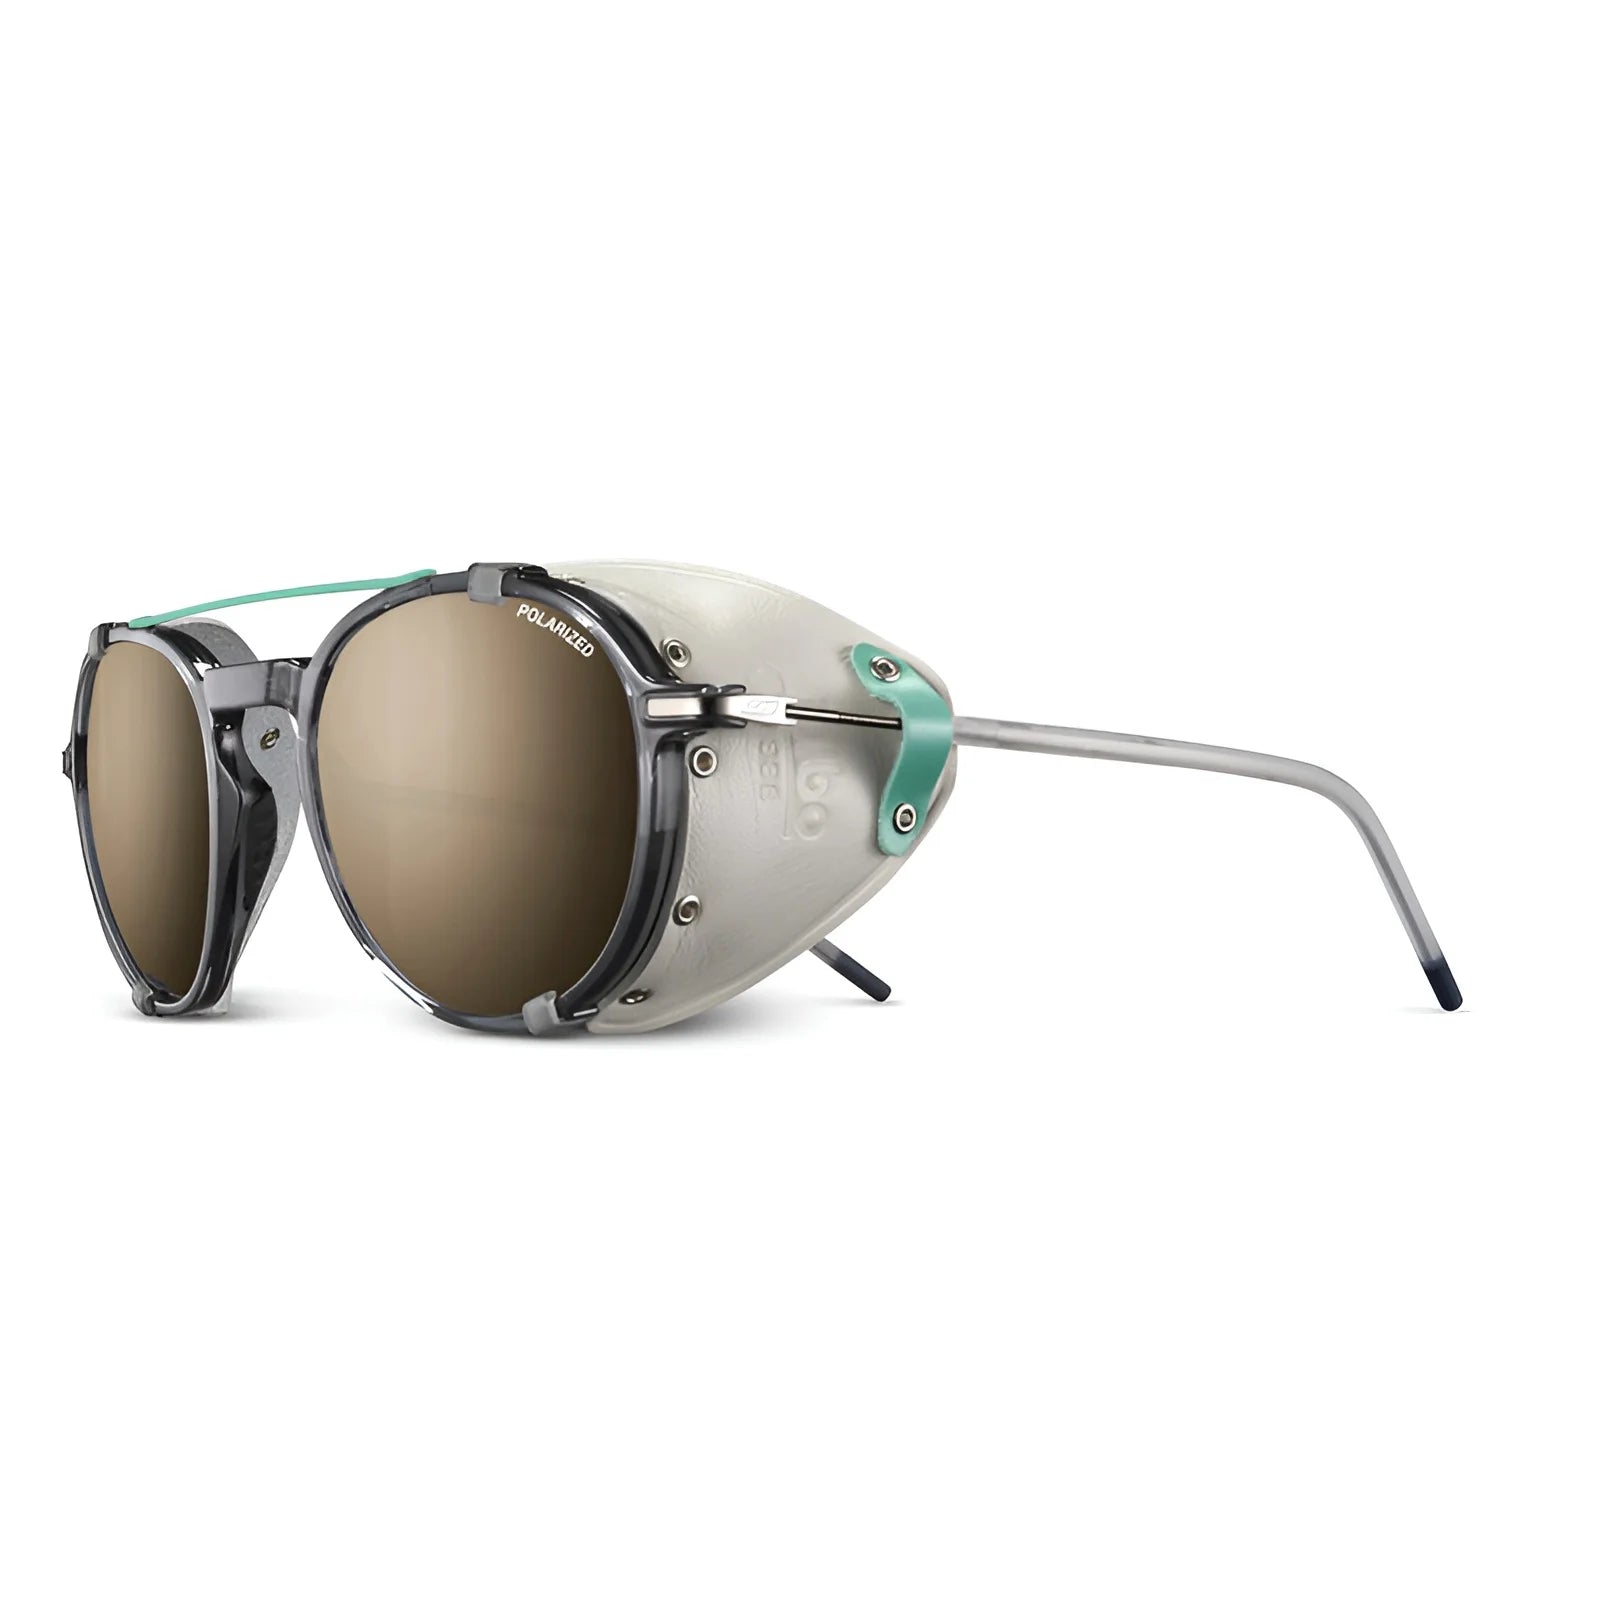 Julbo Legacy Sunglasses Translucent Black / Mint / Spectron 3 Polarized (VLT 12%)